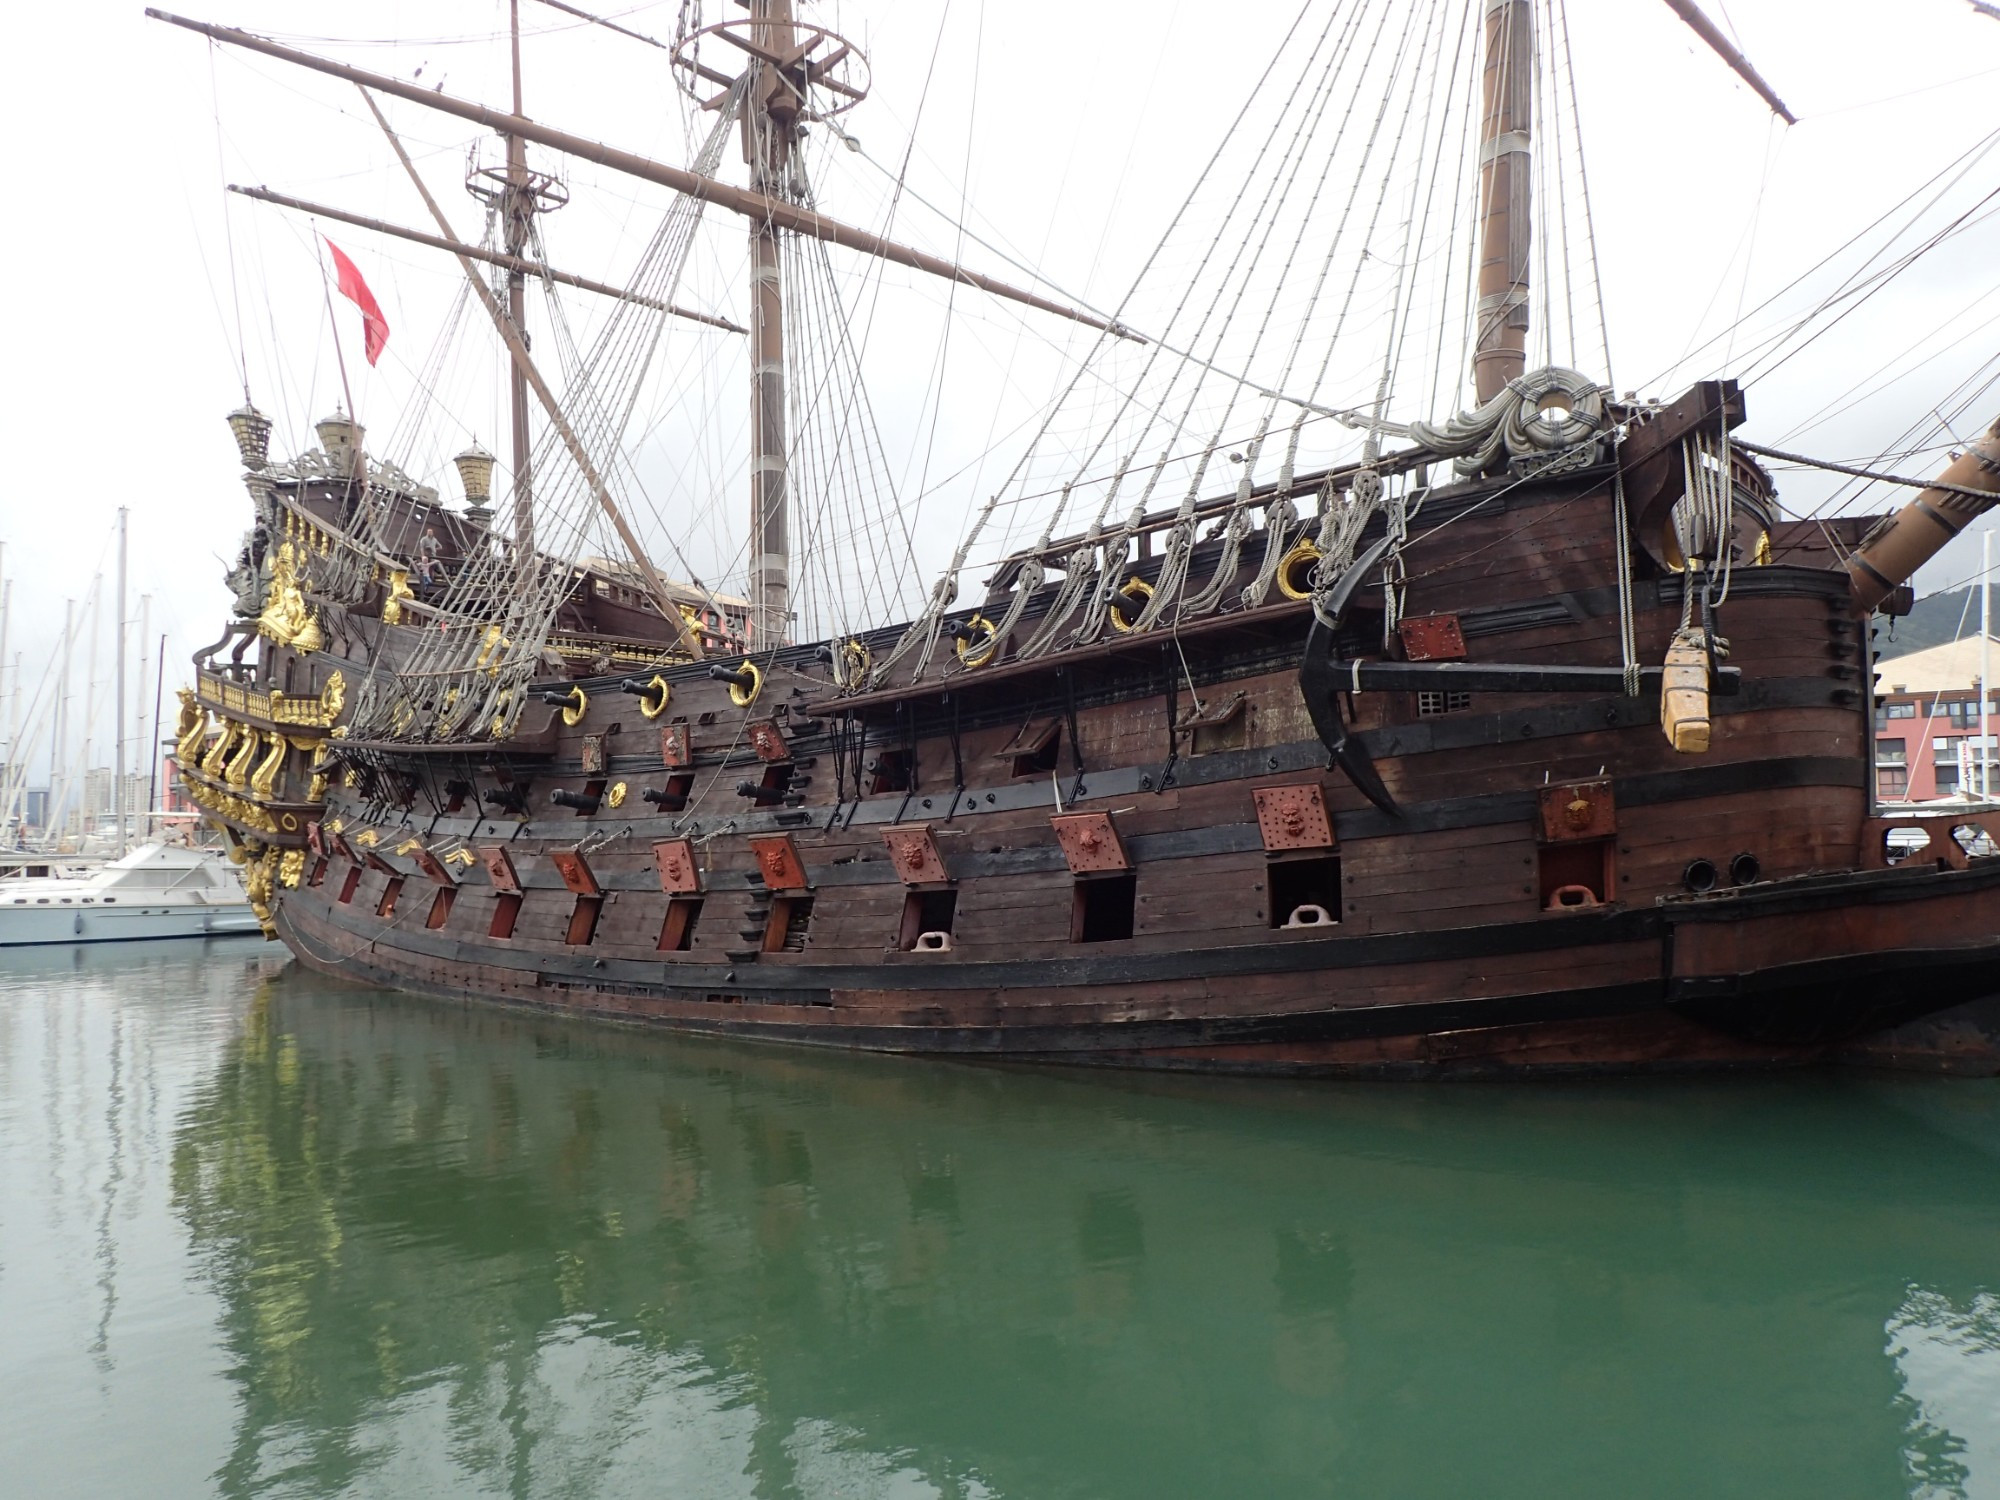 Spanish Galleon 1600 Vascello Neptune, Italy